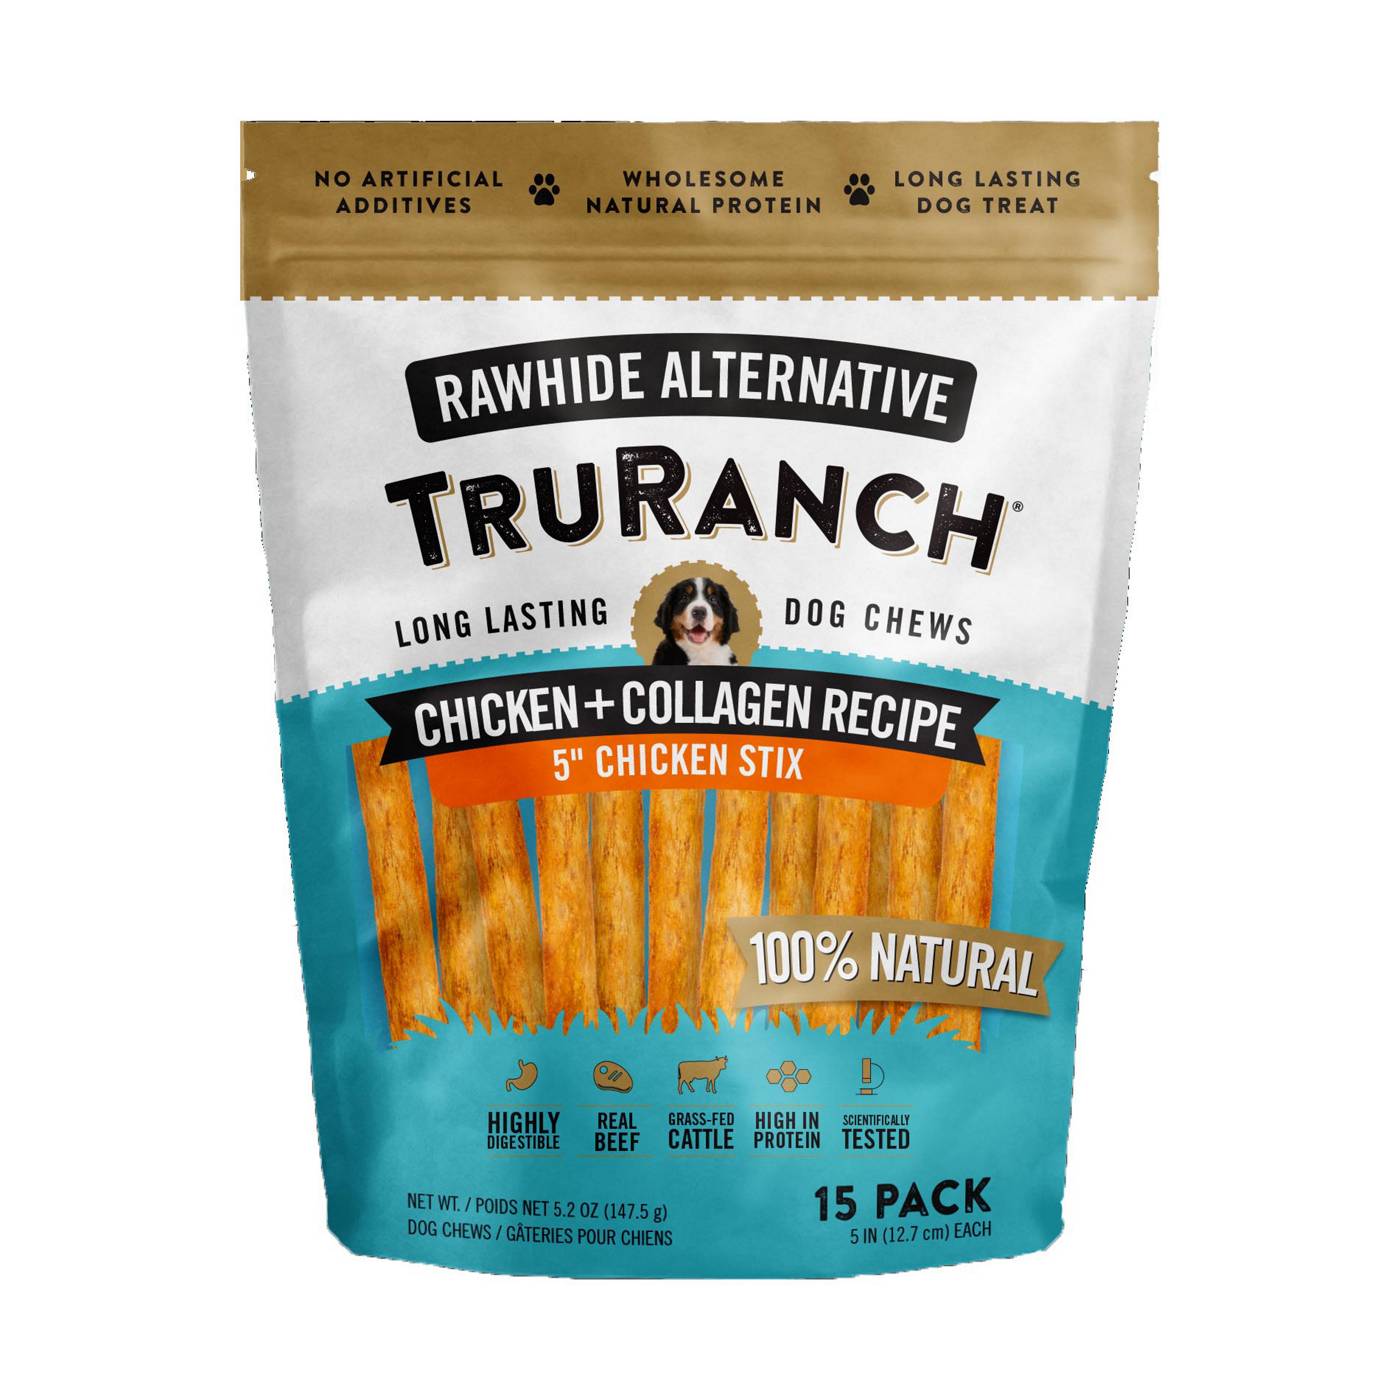 TruRanch Chicken and Collagen Stix Dog Treats; image 1 of 2